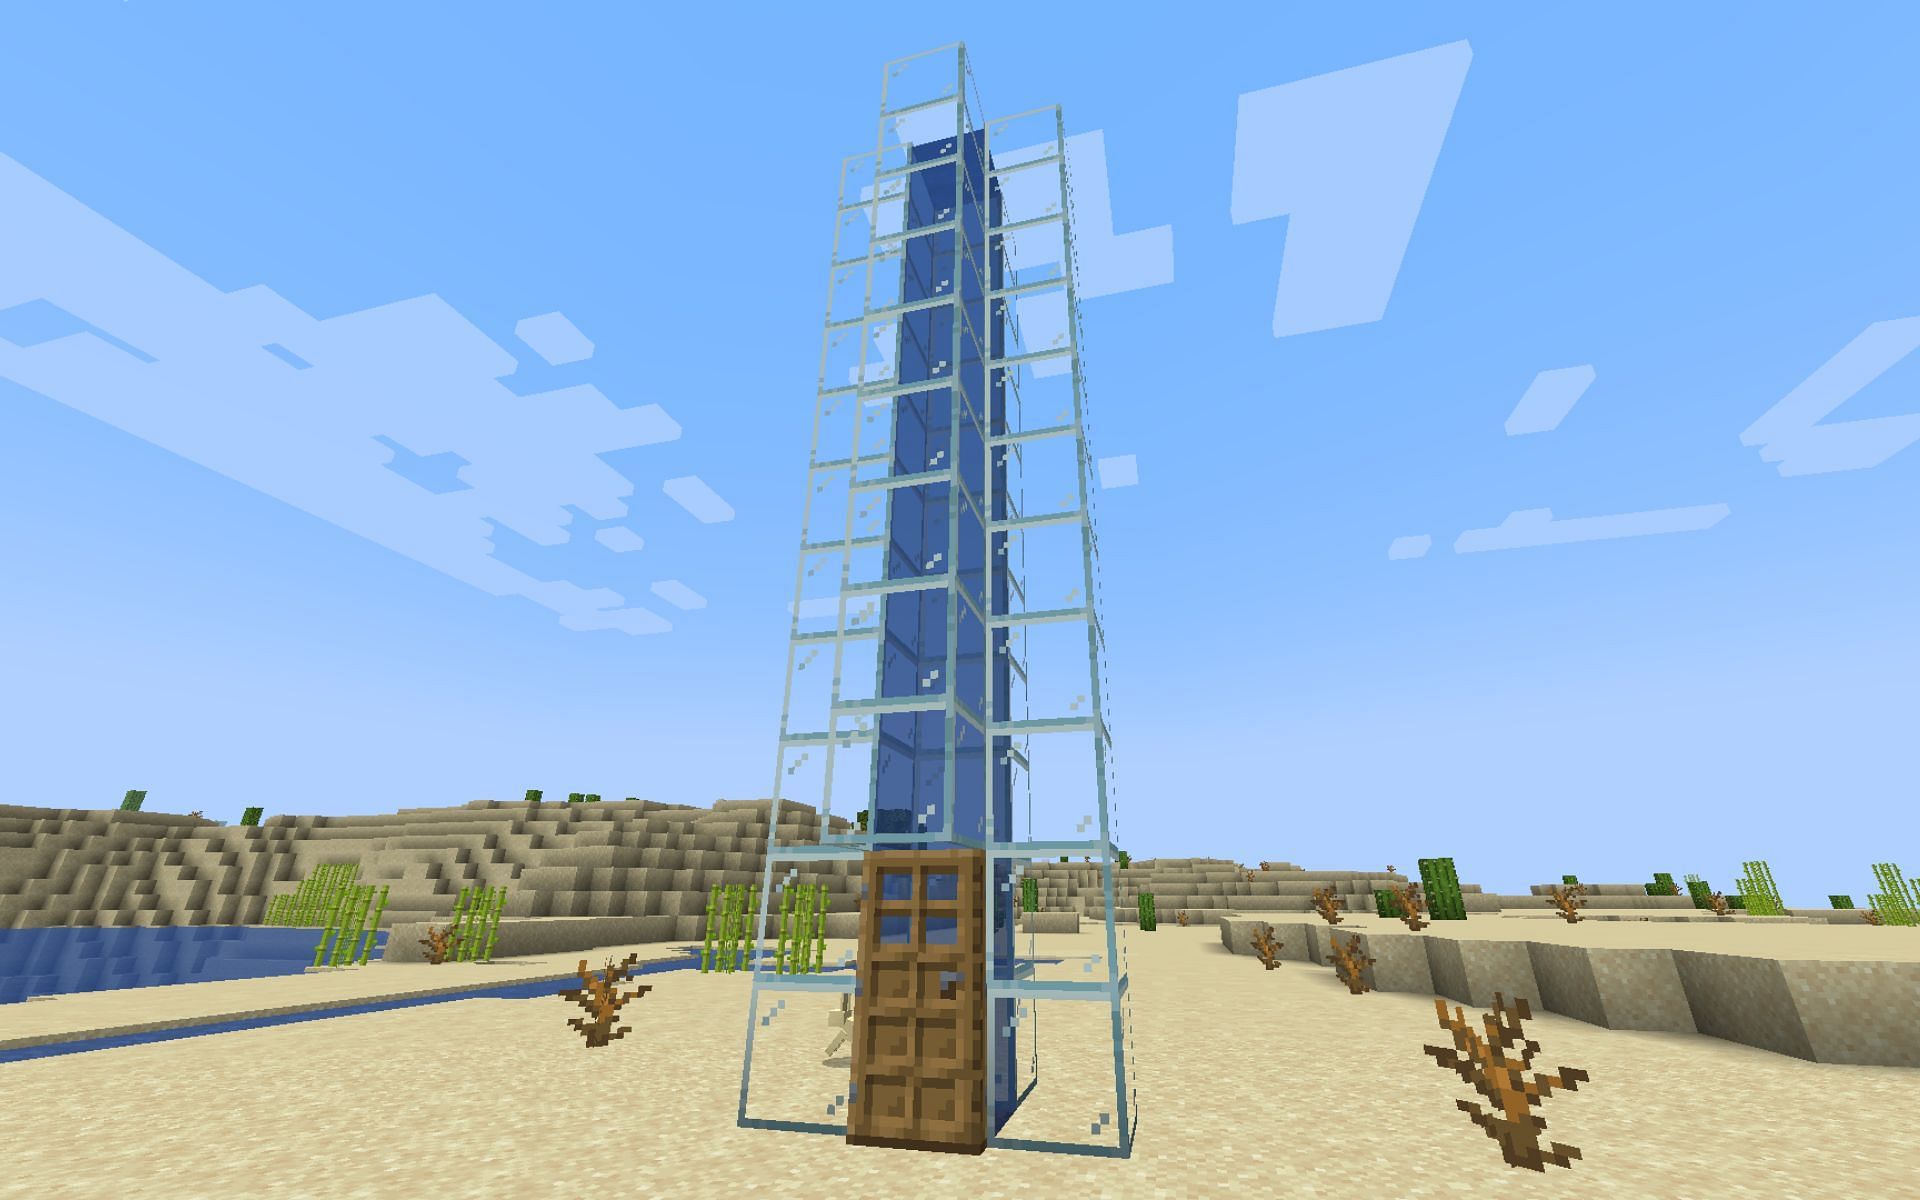 Soul sand elevator (Image via Minecraft)